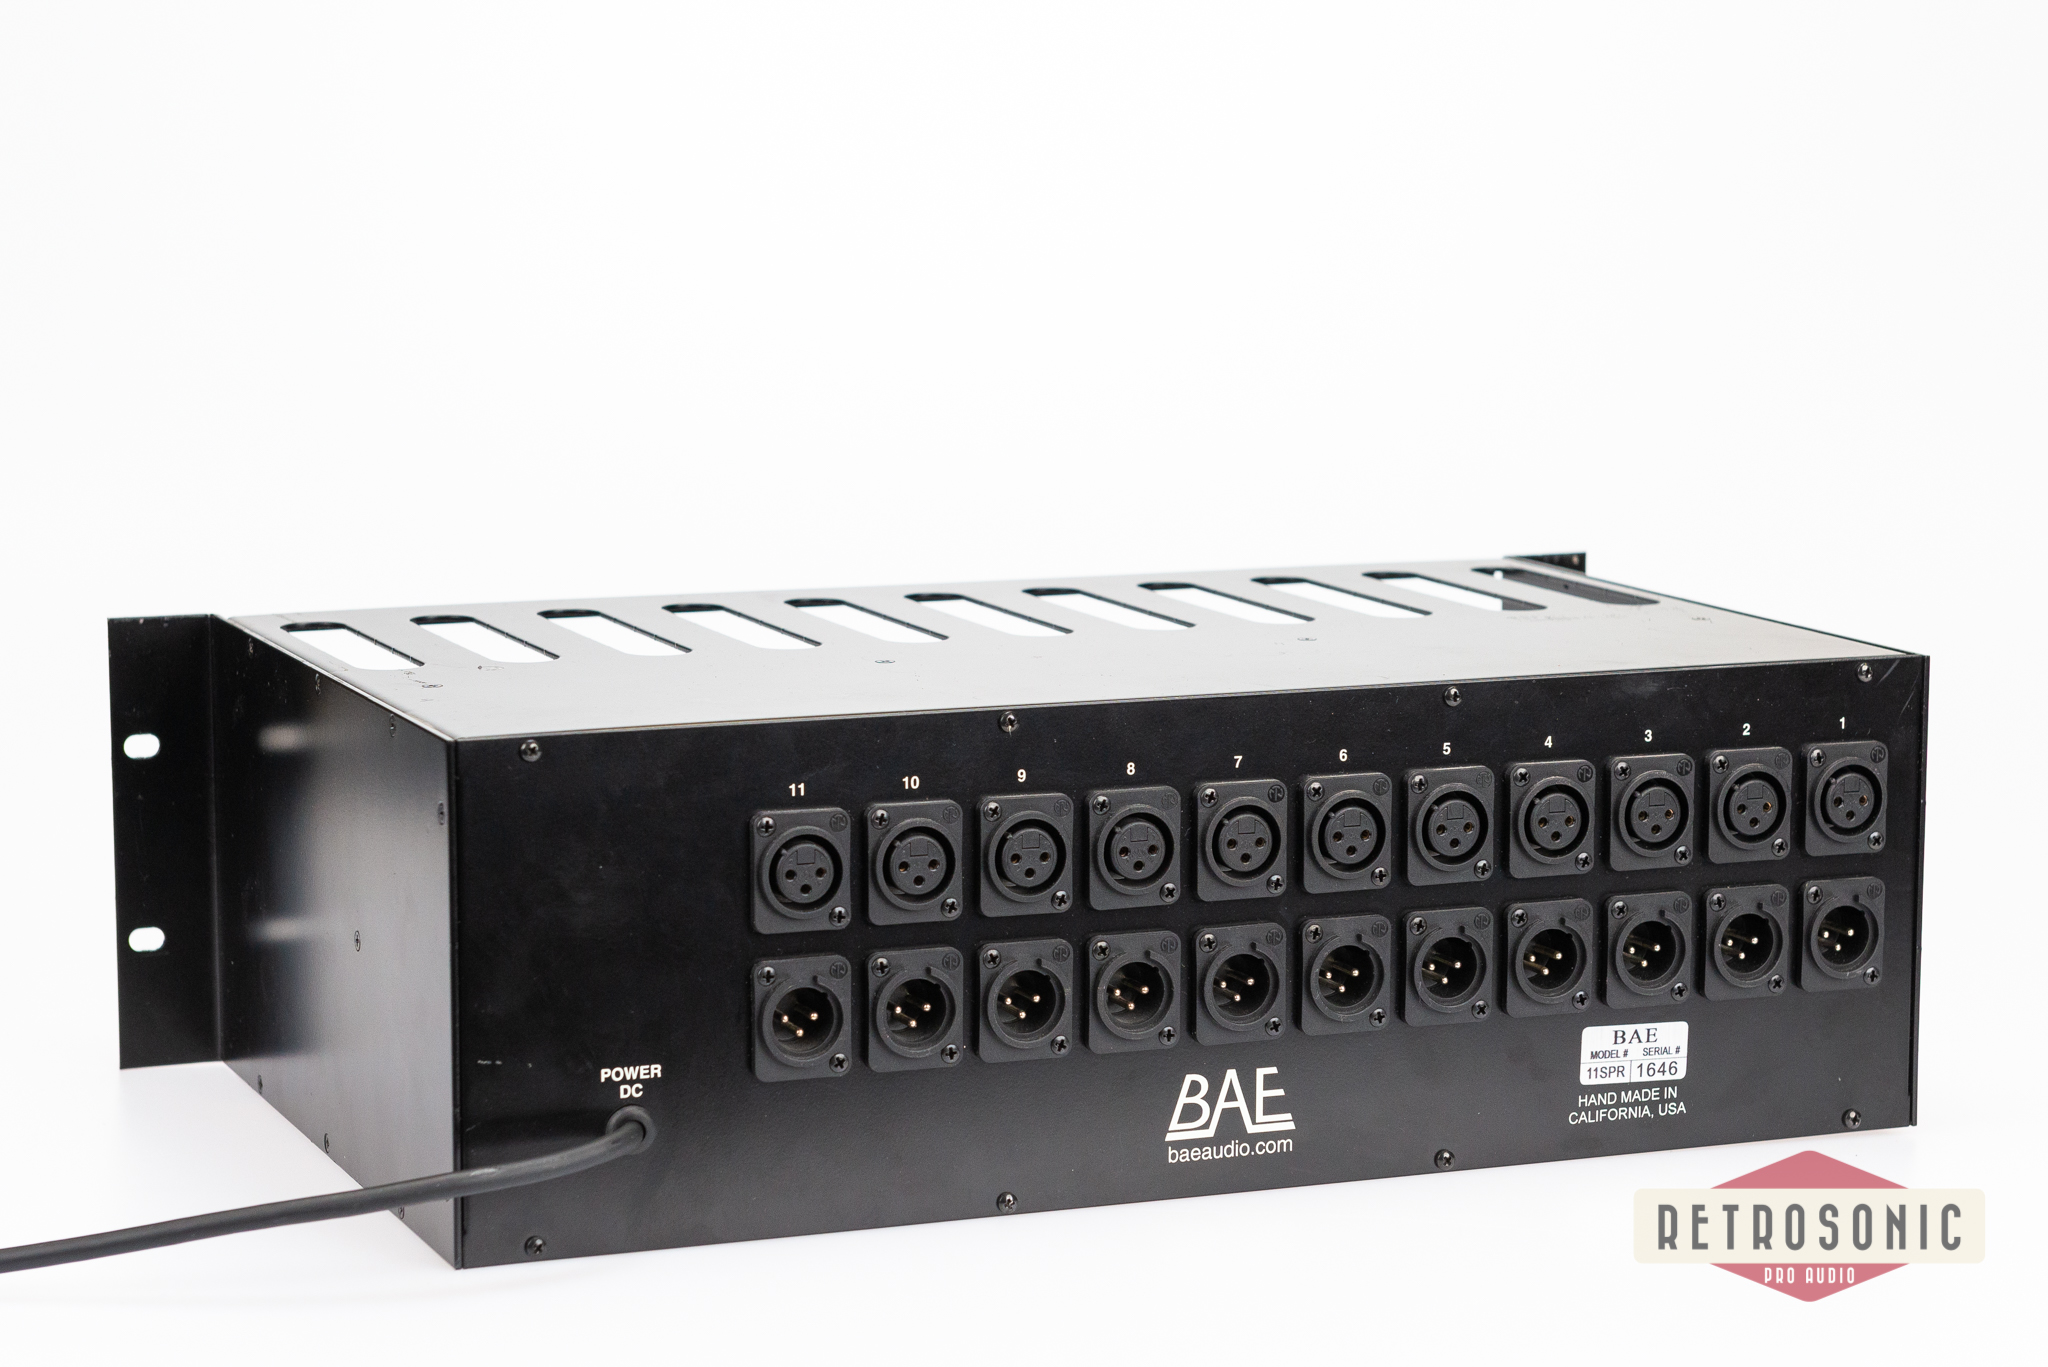 BAE 500 series 11-slot rack